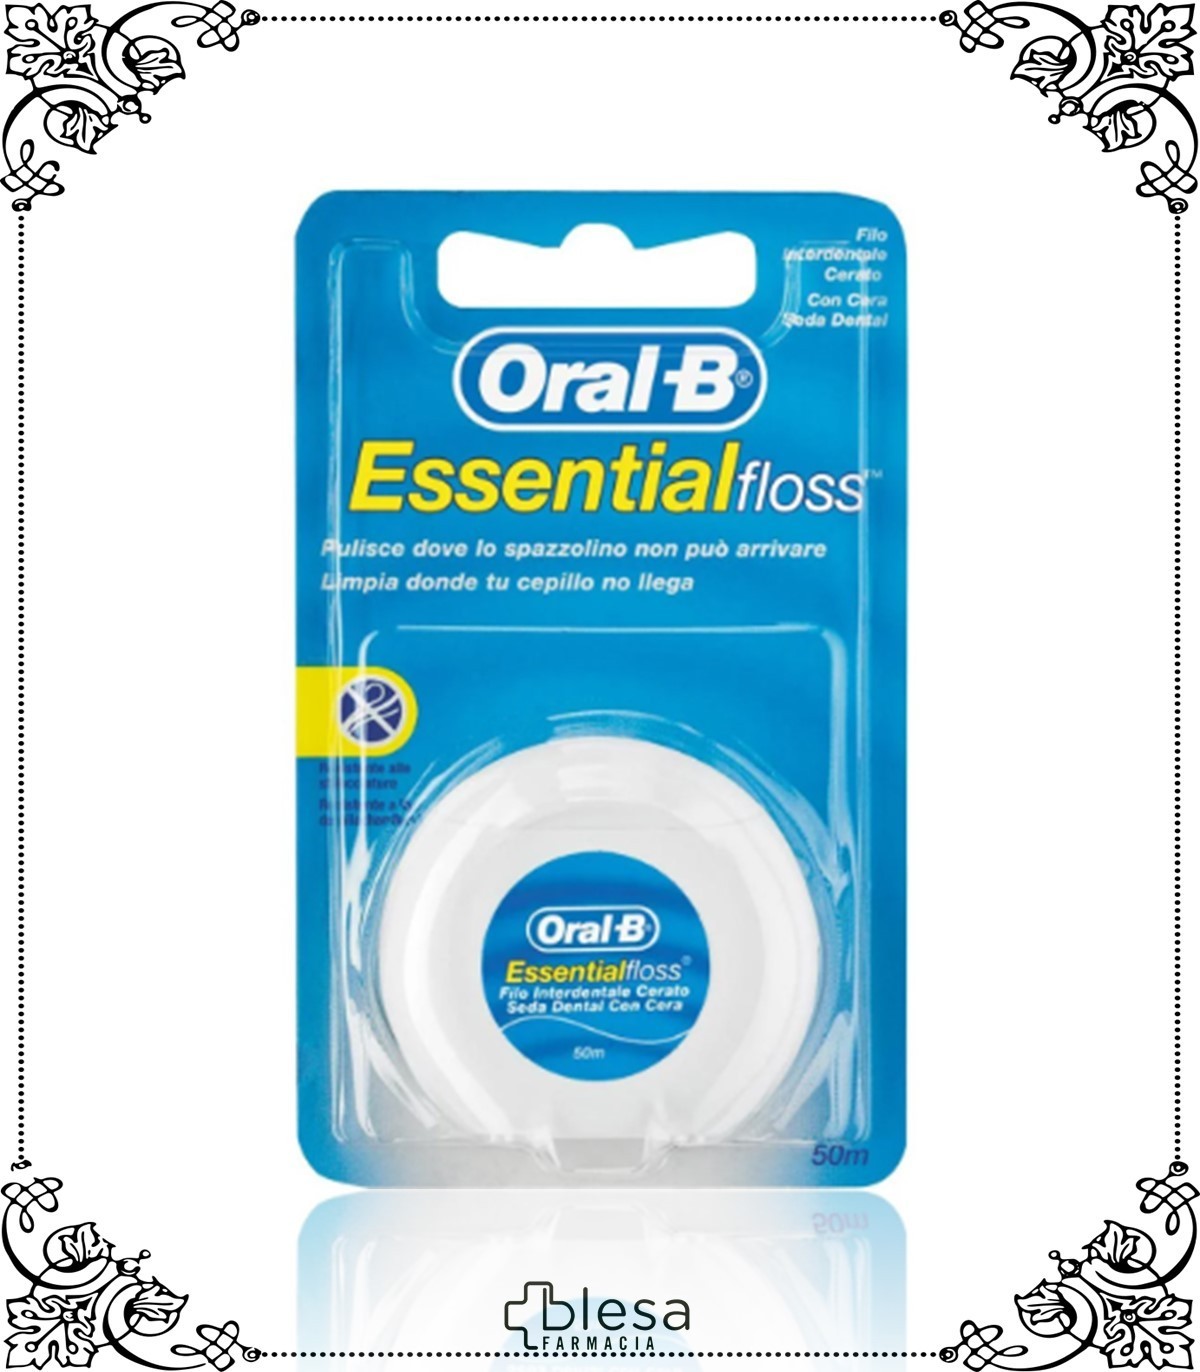 Comprar Hilo Dental Oral-B Essential Floss Menta